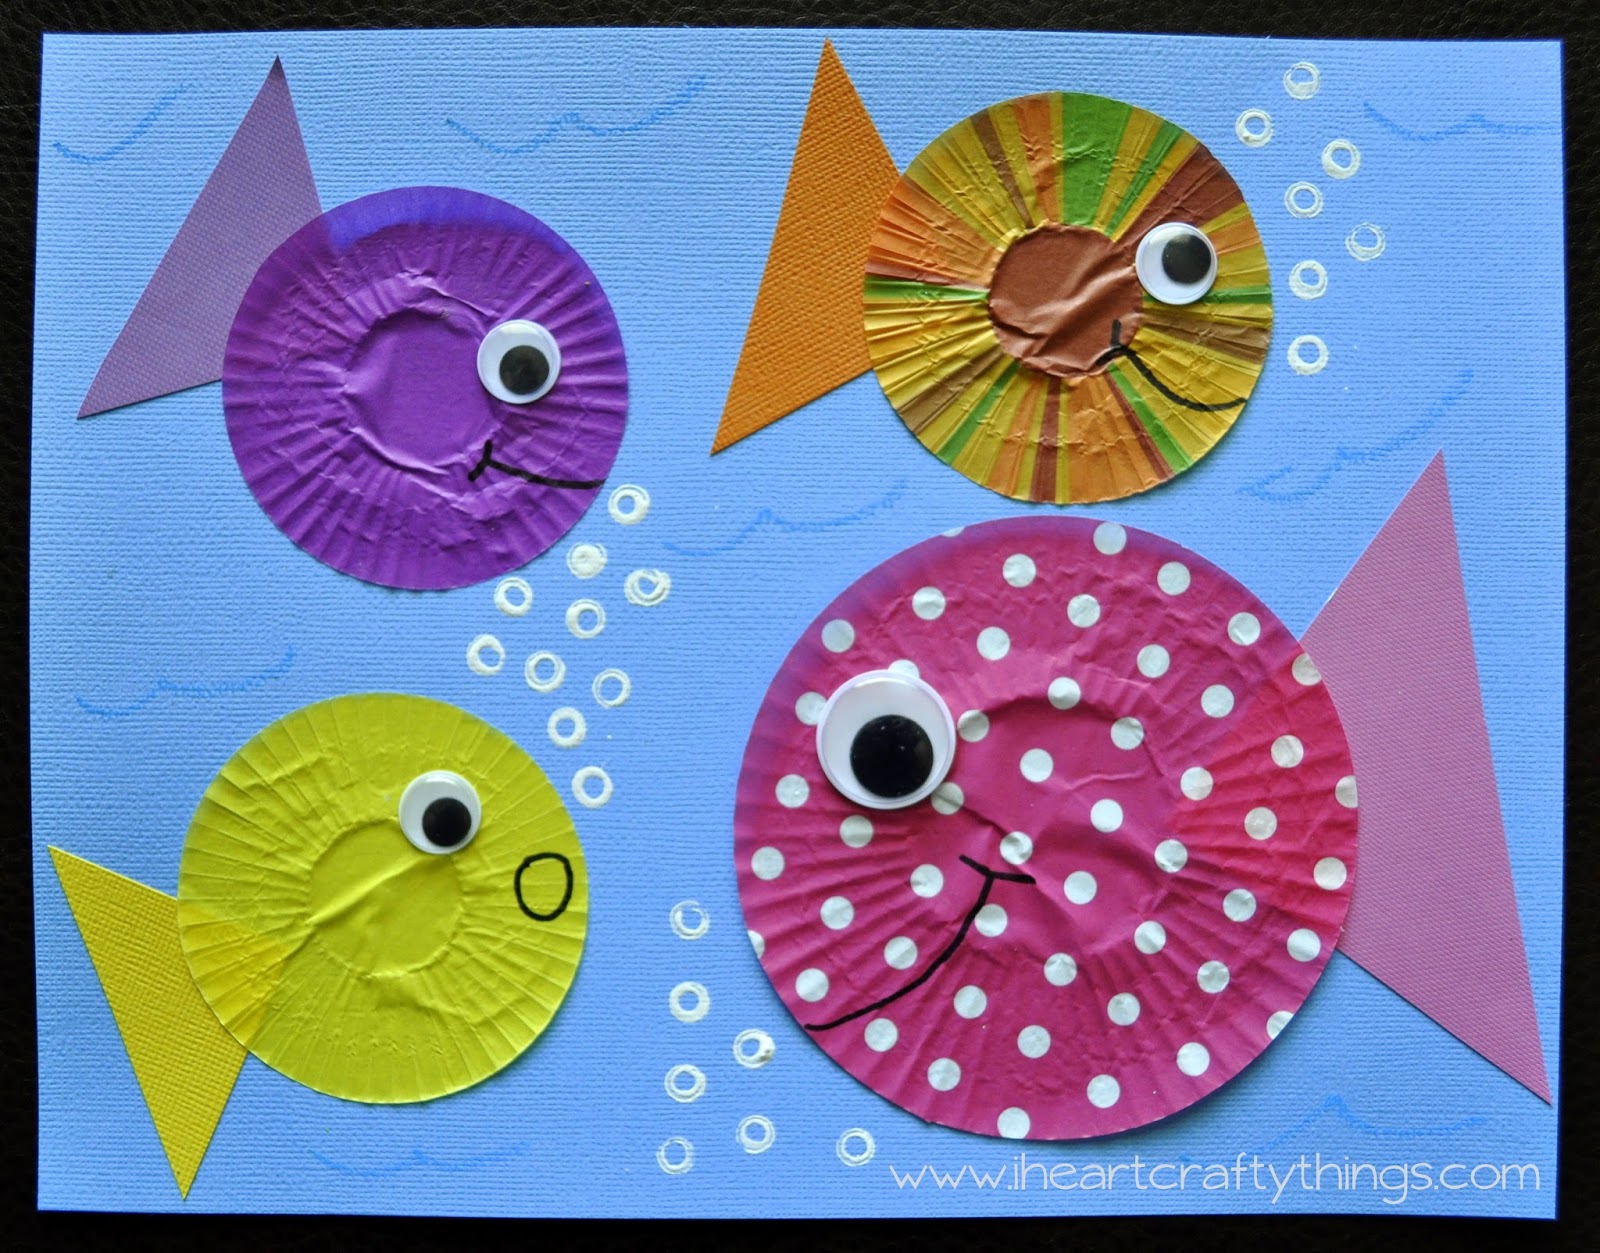 Cupcake liner fish craft 1  Crafts and Worksheets for Preschool,Toddler  and Kindergarten